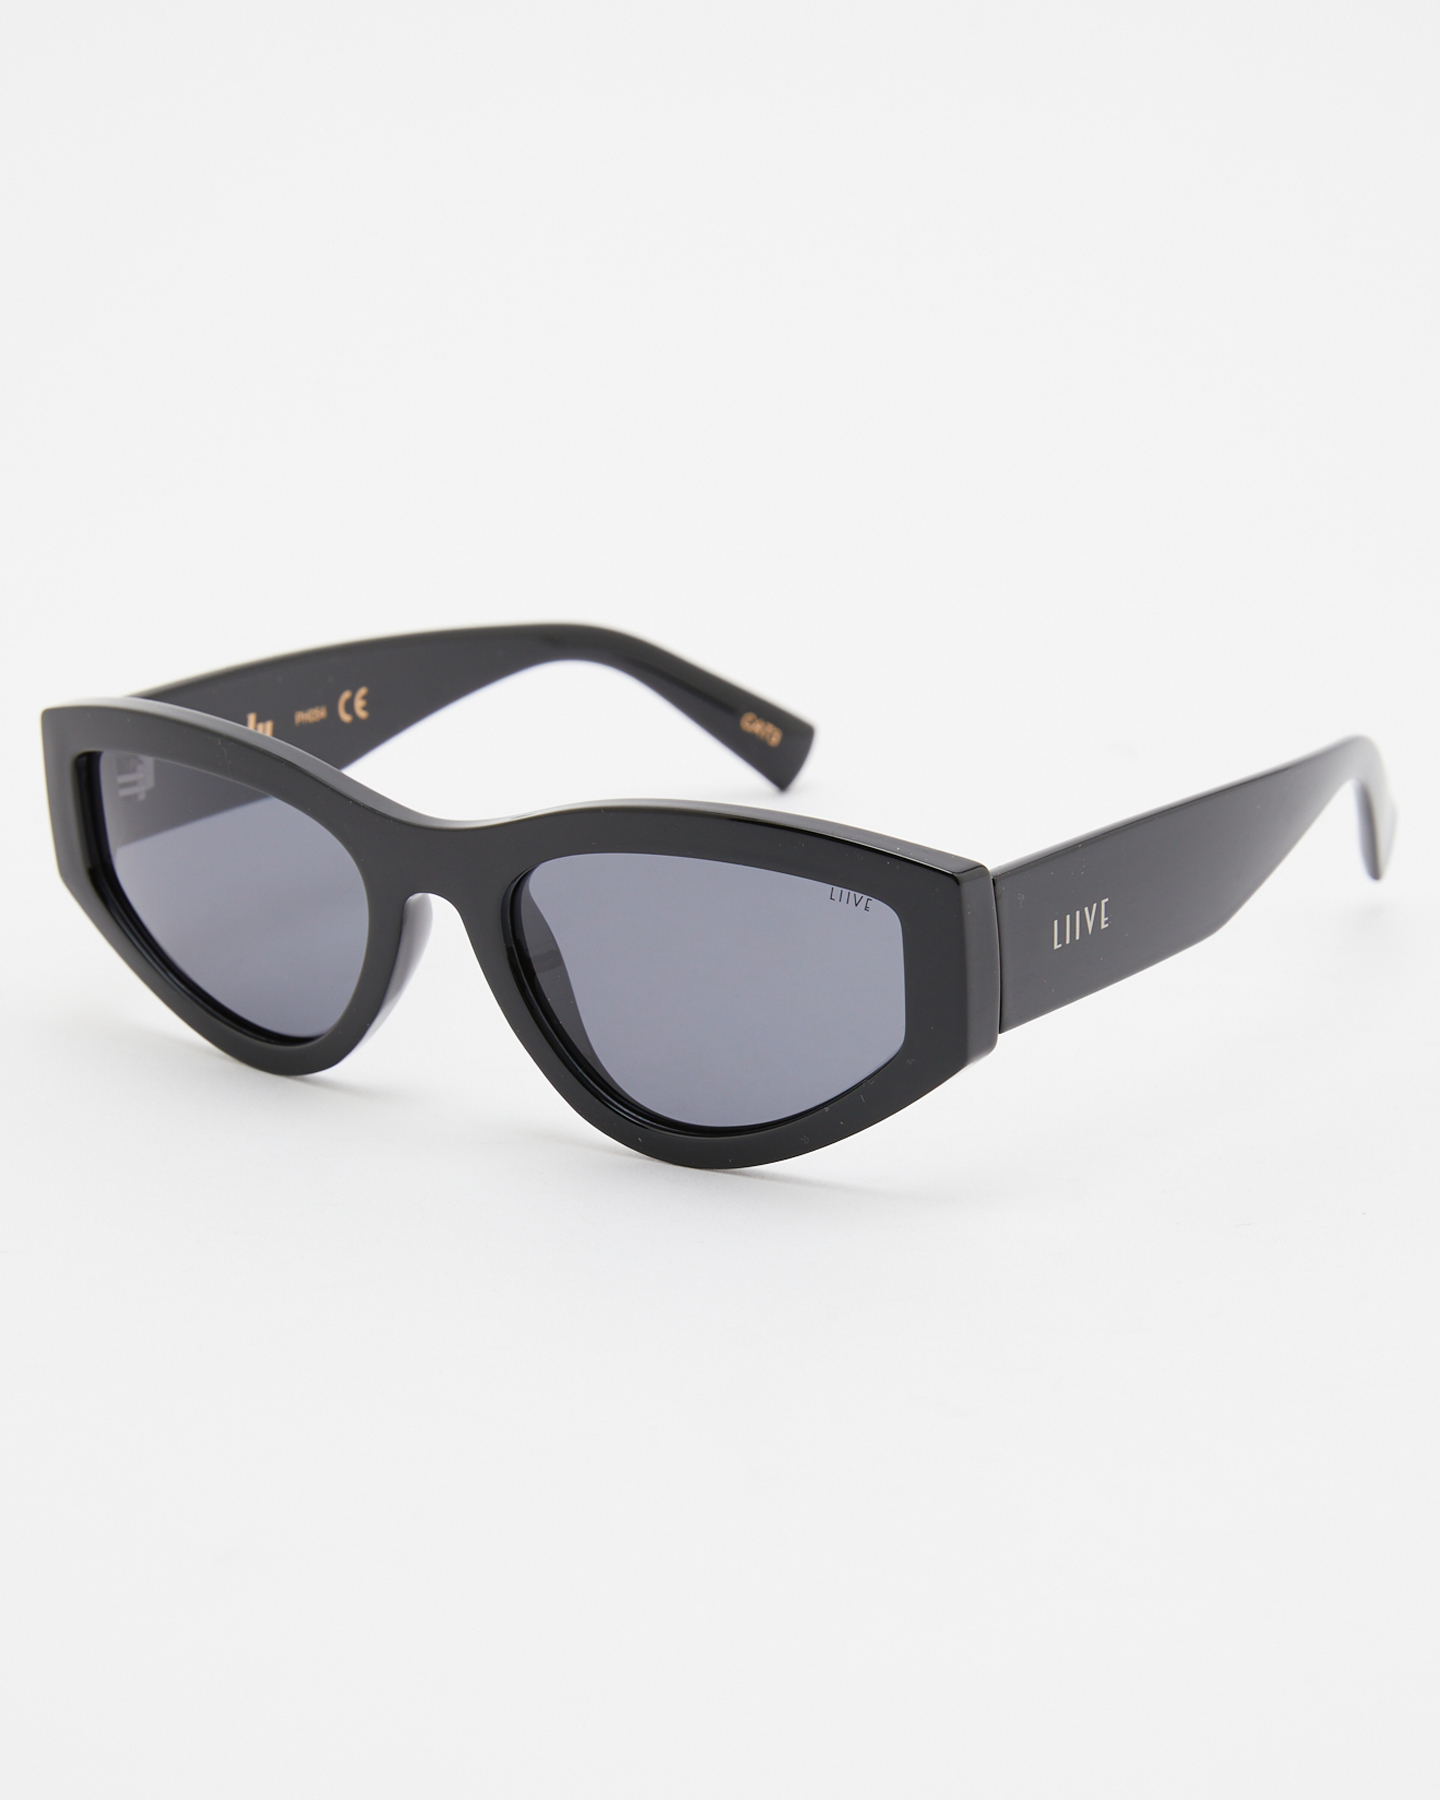 Liive Vision Brooksy Lulu Sunglasses - Polar Matt Black | SurfStitch